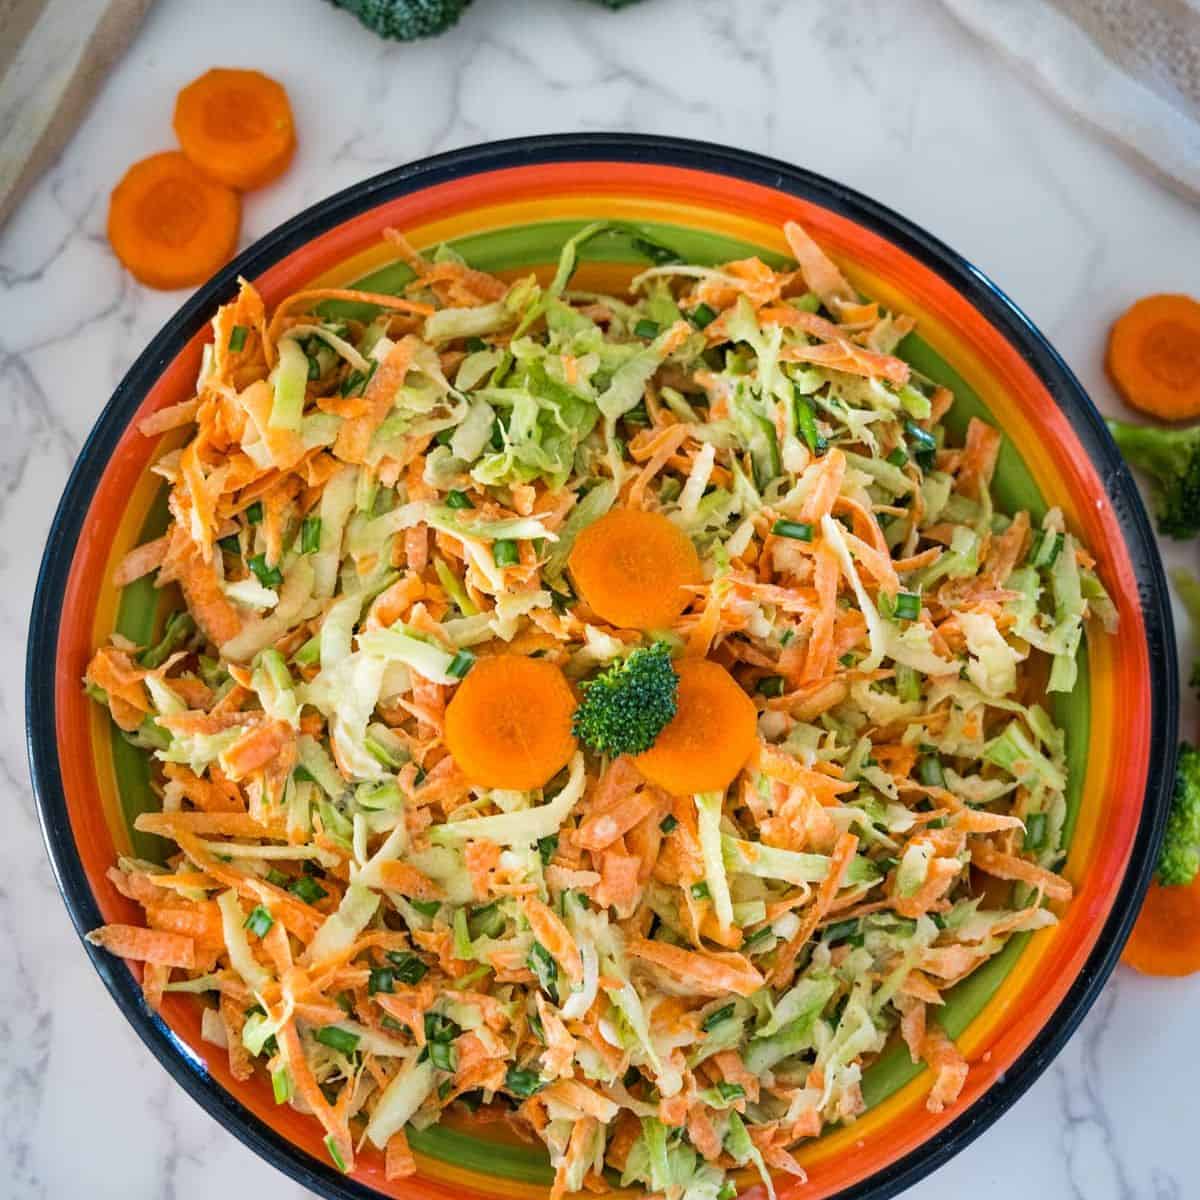 Carrot slaw in a bowl with broccoli stem slaw.